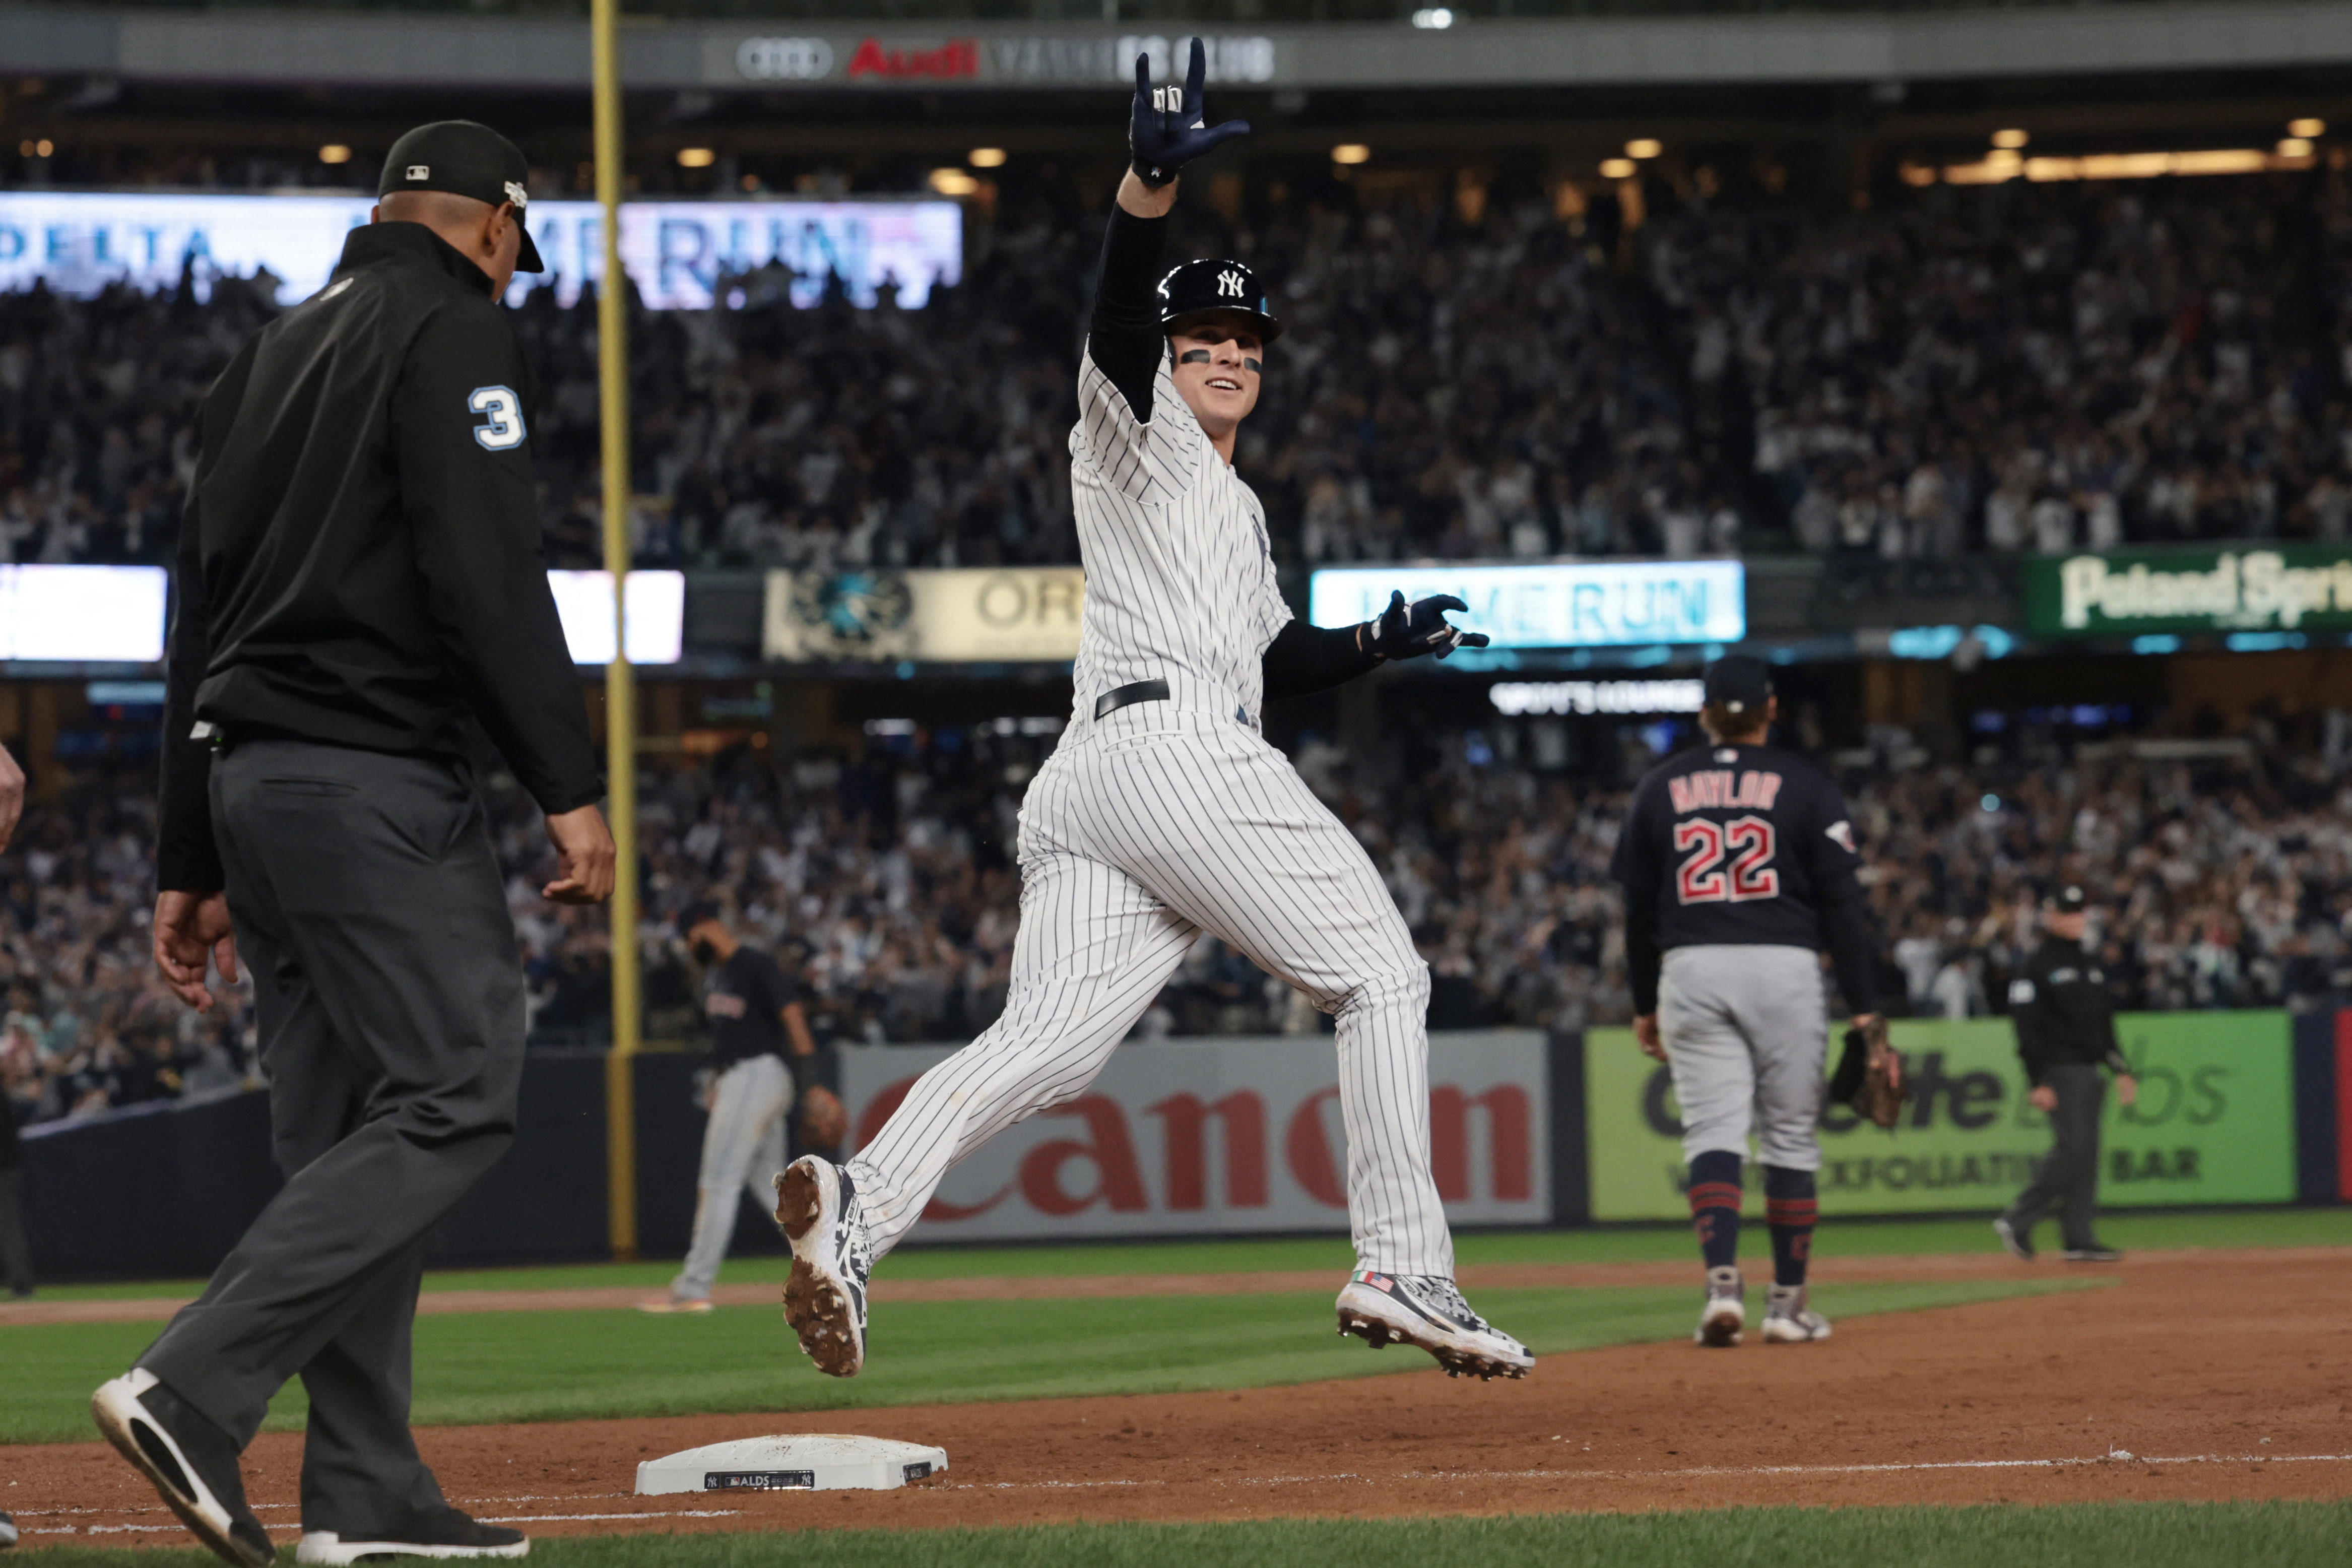 MLB roundup: Yordan Alvarez, Astros get historic win vs. Mariners